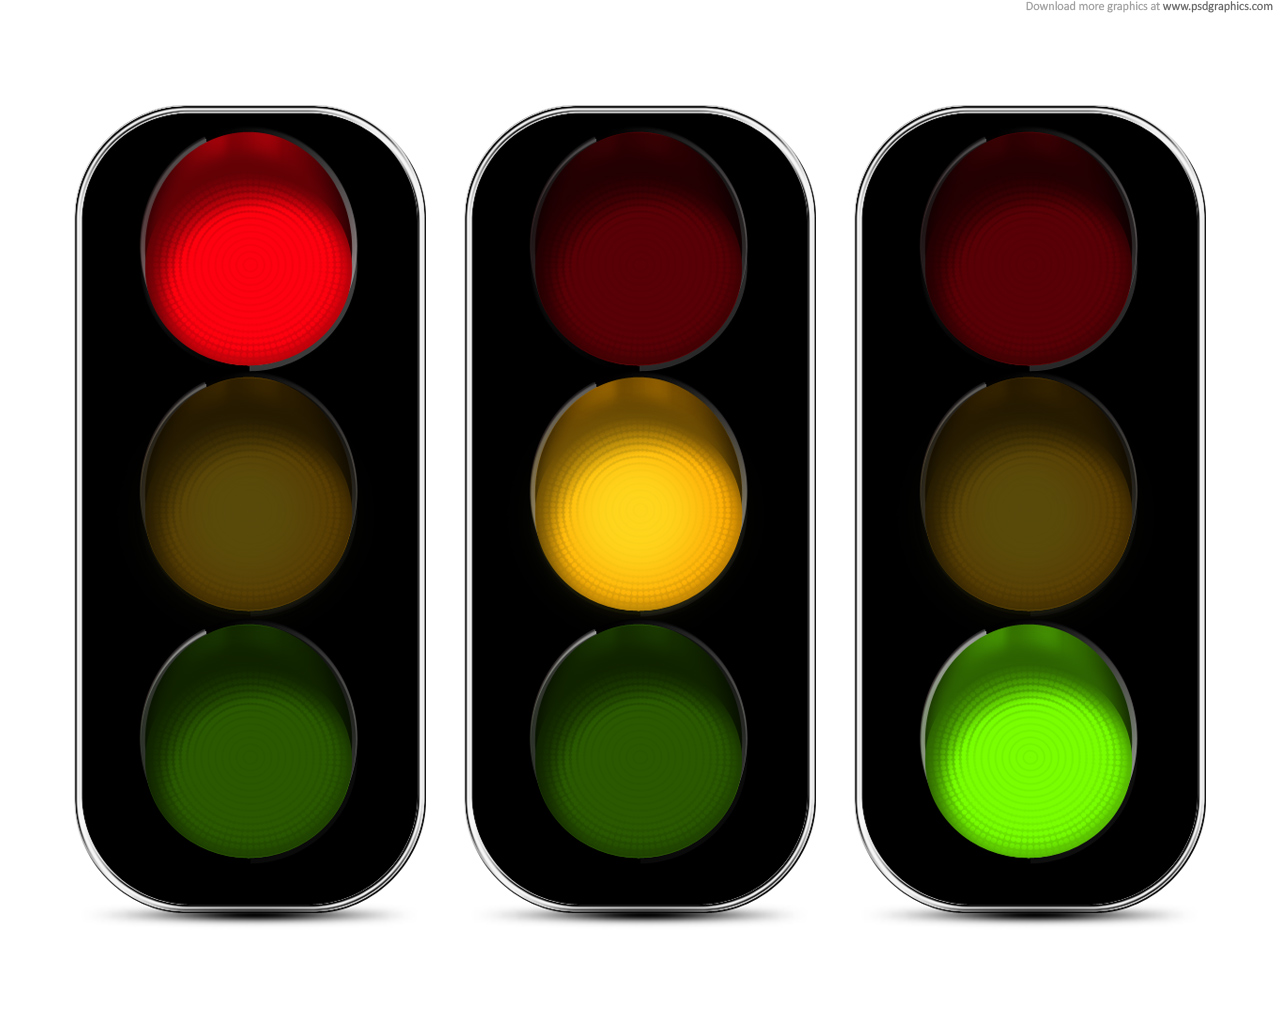 Green Traffic Light Clipart